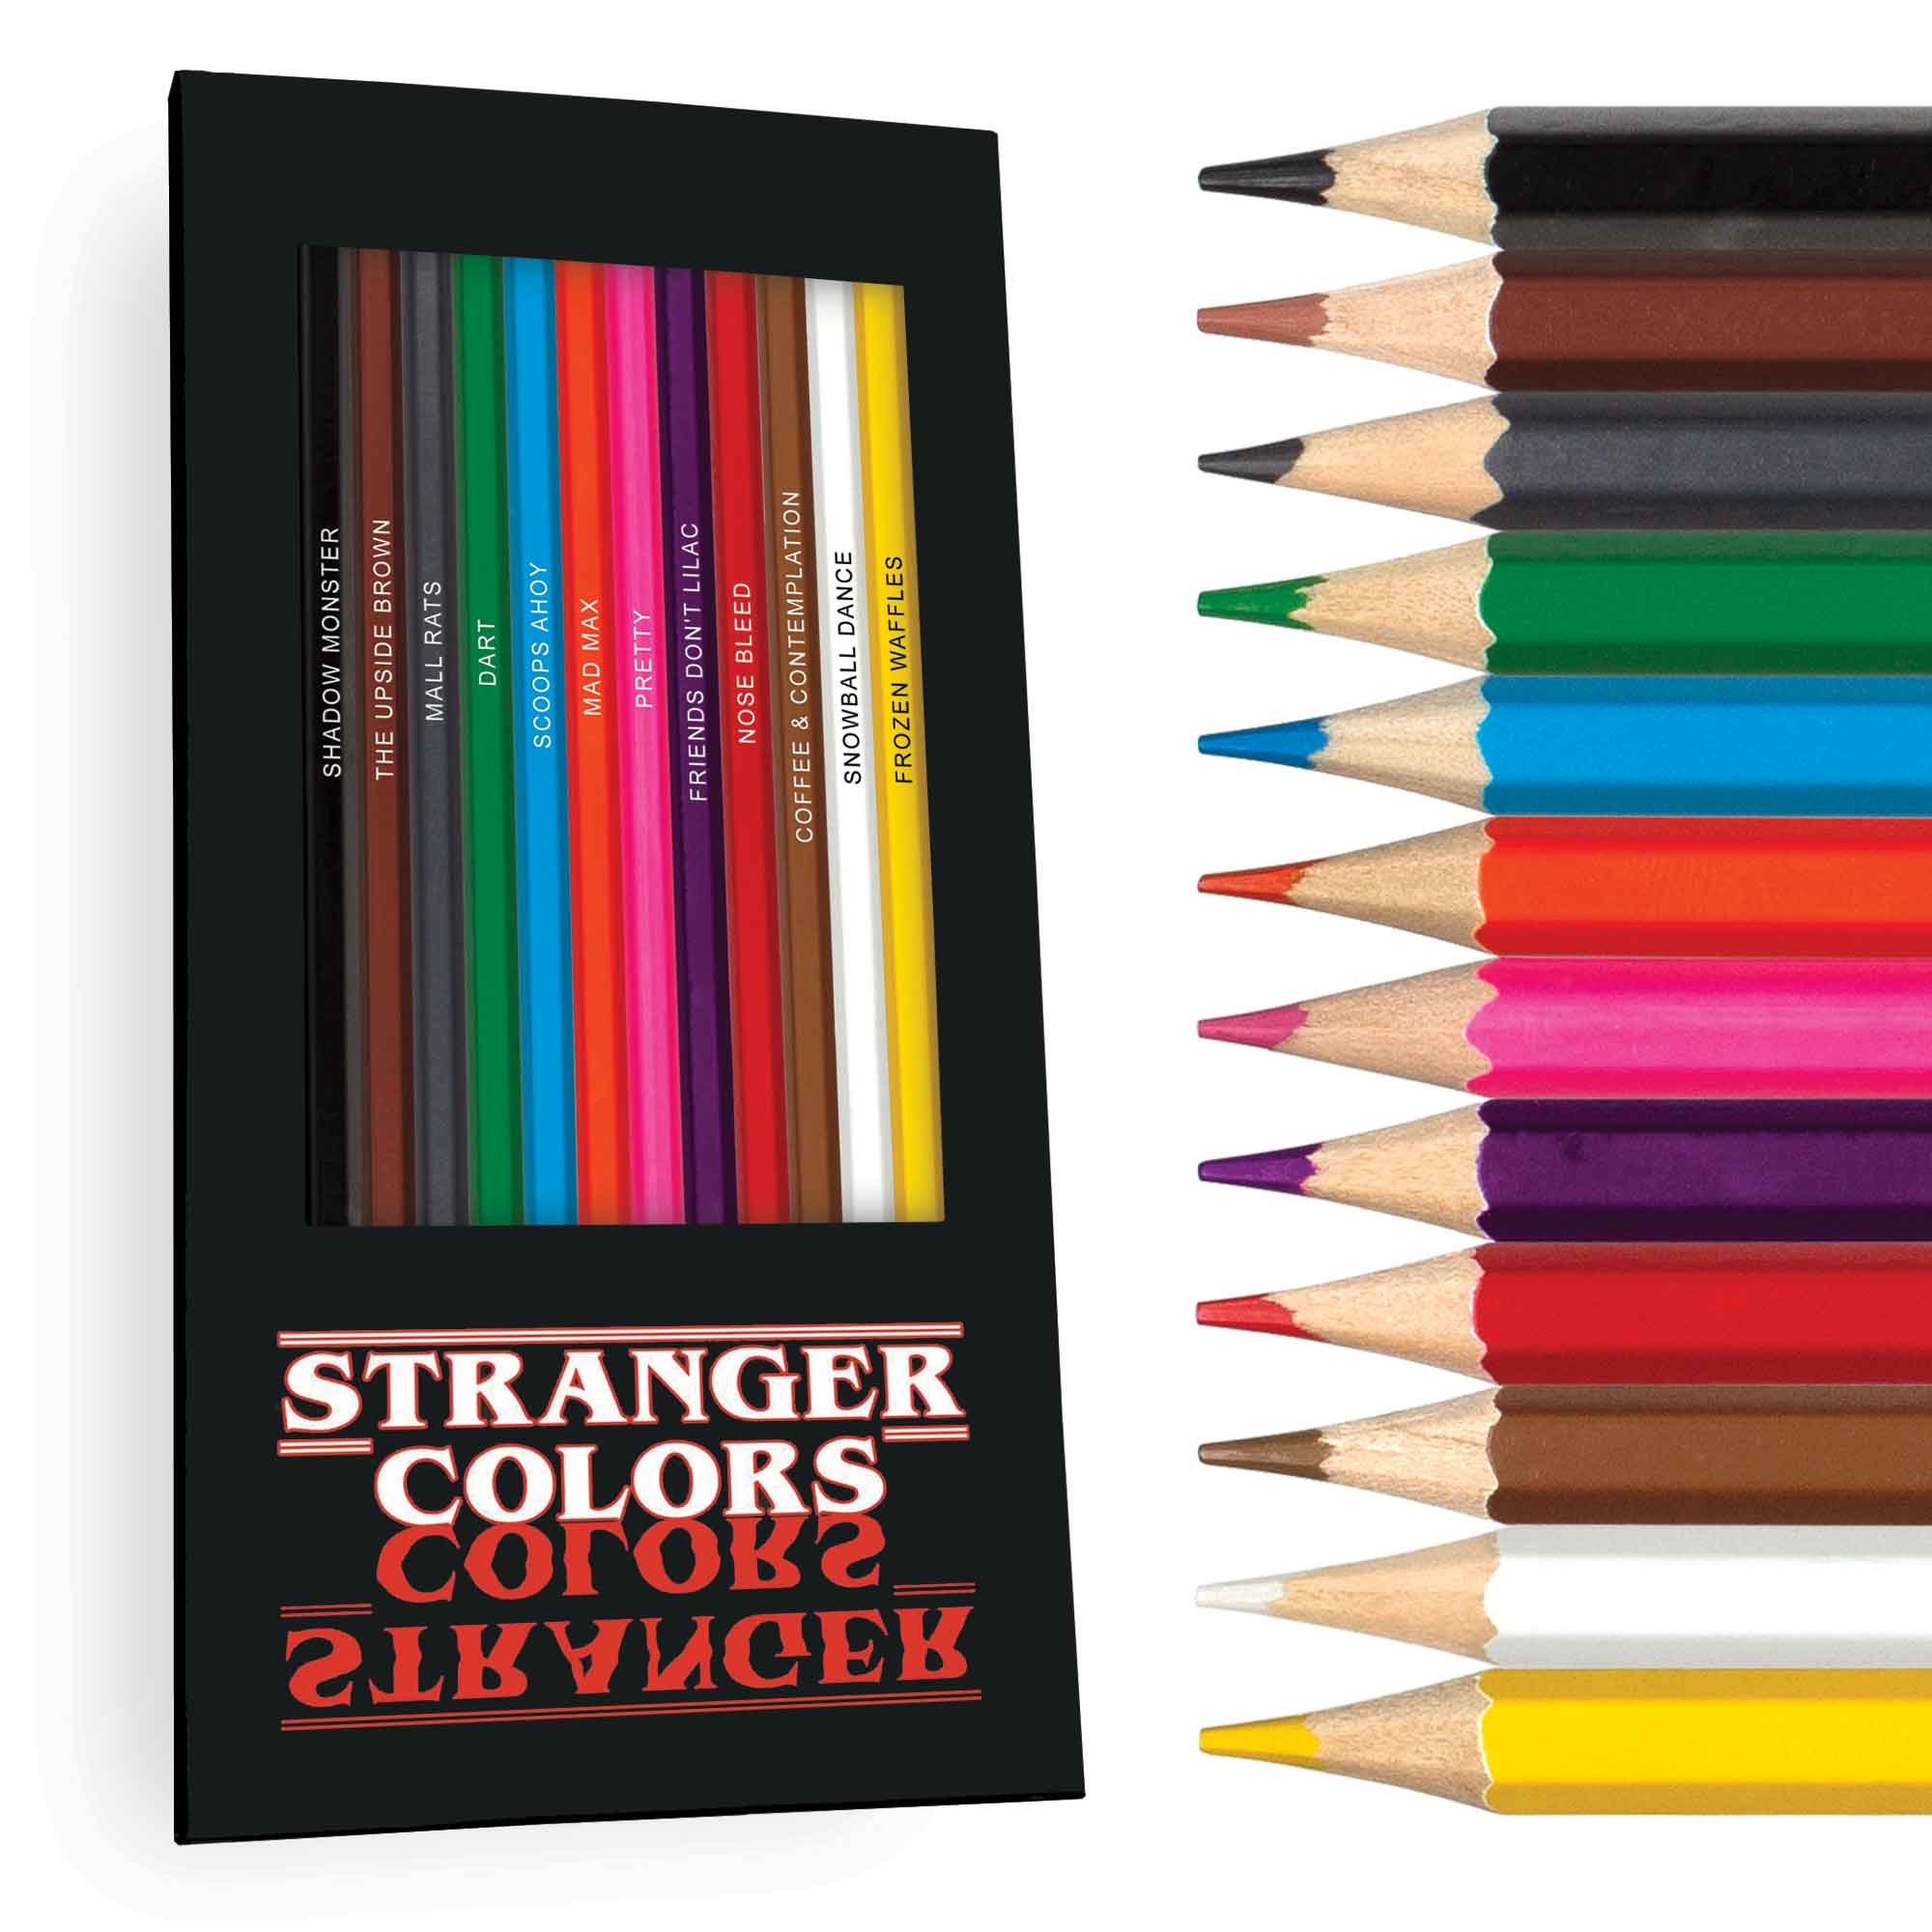 GREUS Drawing Pencils Sketch Pencils Set of and 50 similar items